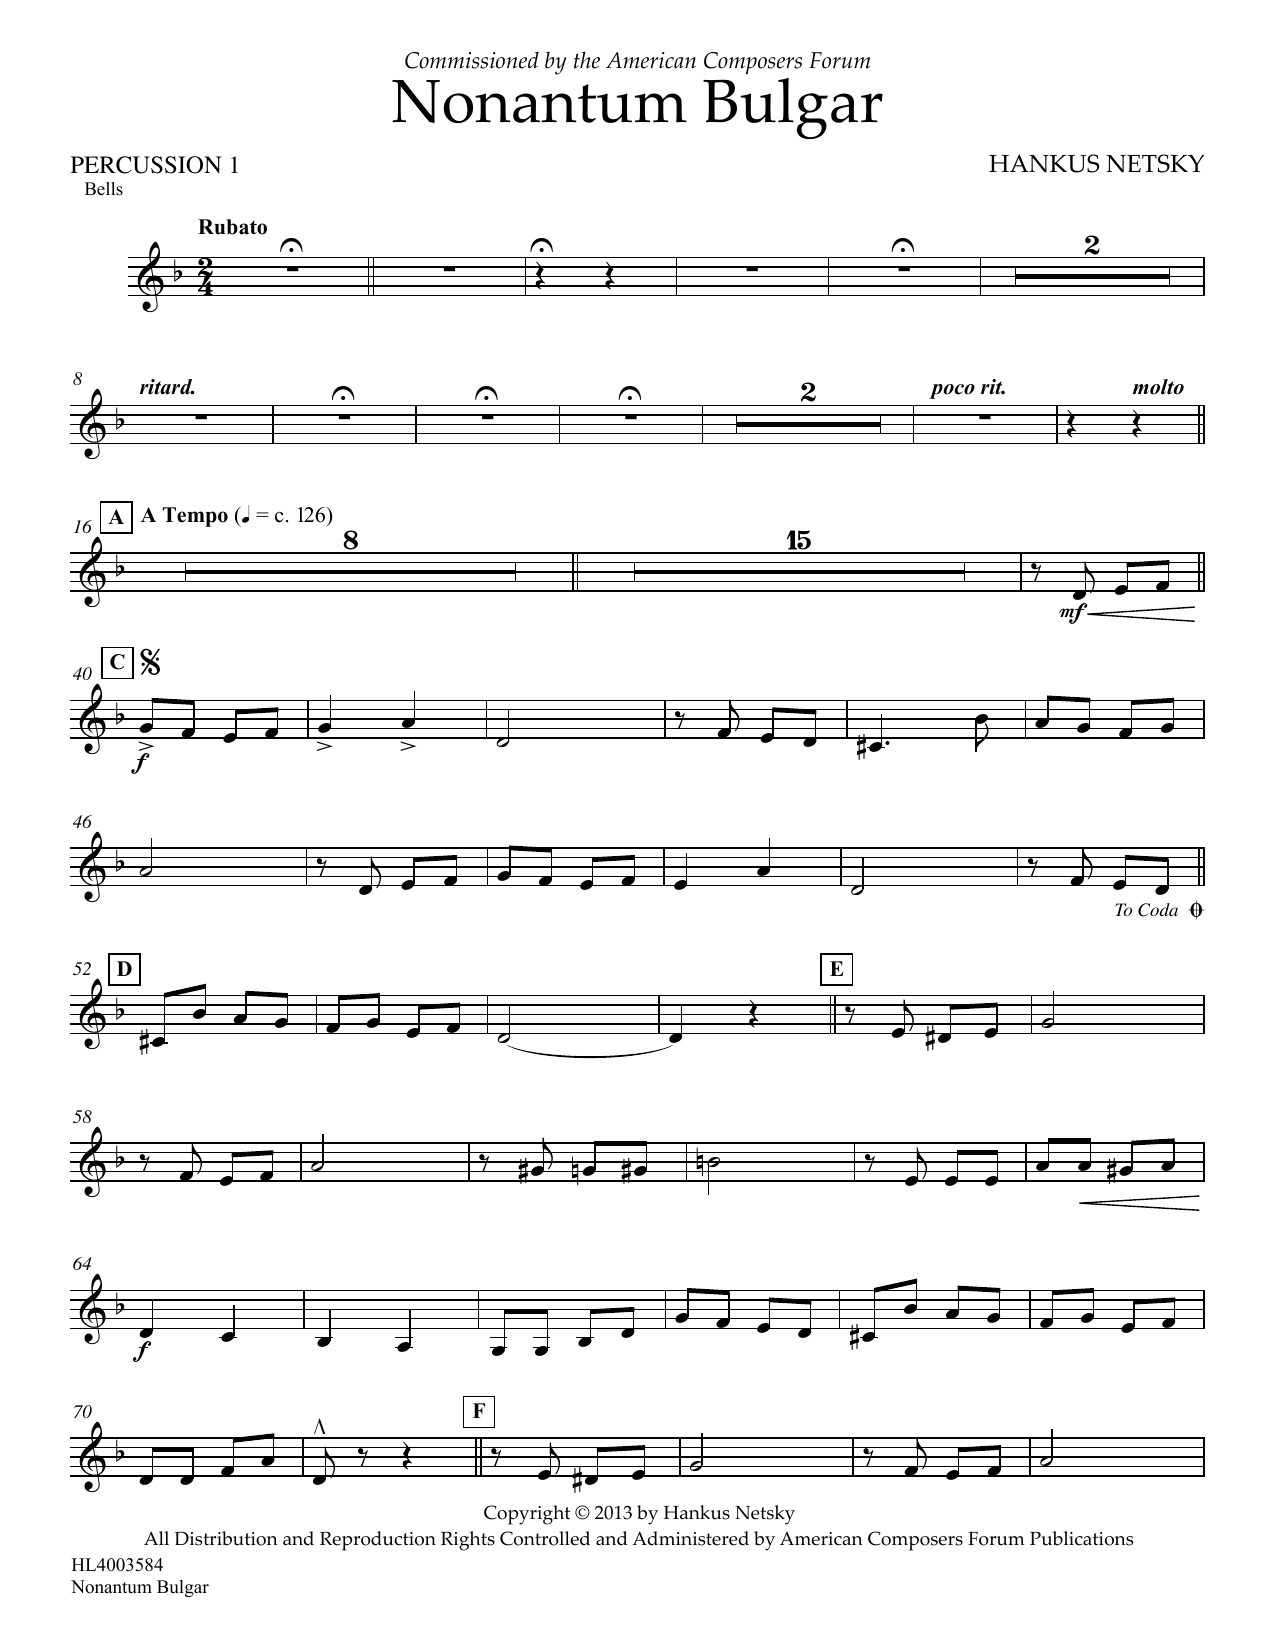 Hankus Netsky Nonantum Bulgar - Percussion 1 Sheet Music Notes & Chords for Concert Band - Download or Print PDF